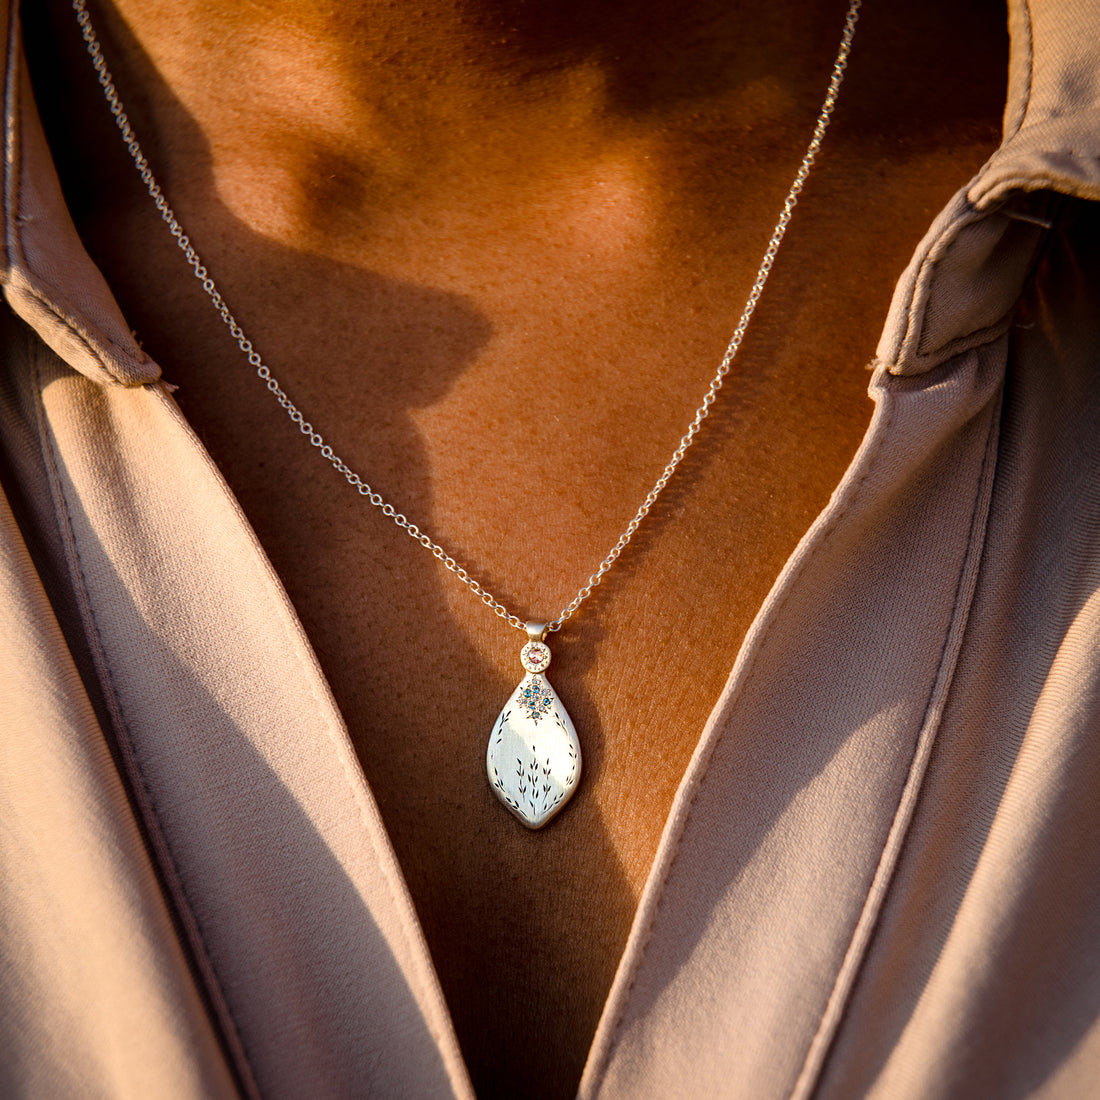 Adel Chefridi Silver "Secret Garden" Necklace with Aquamarines & Diamonds